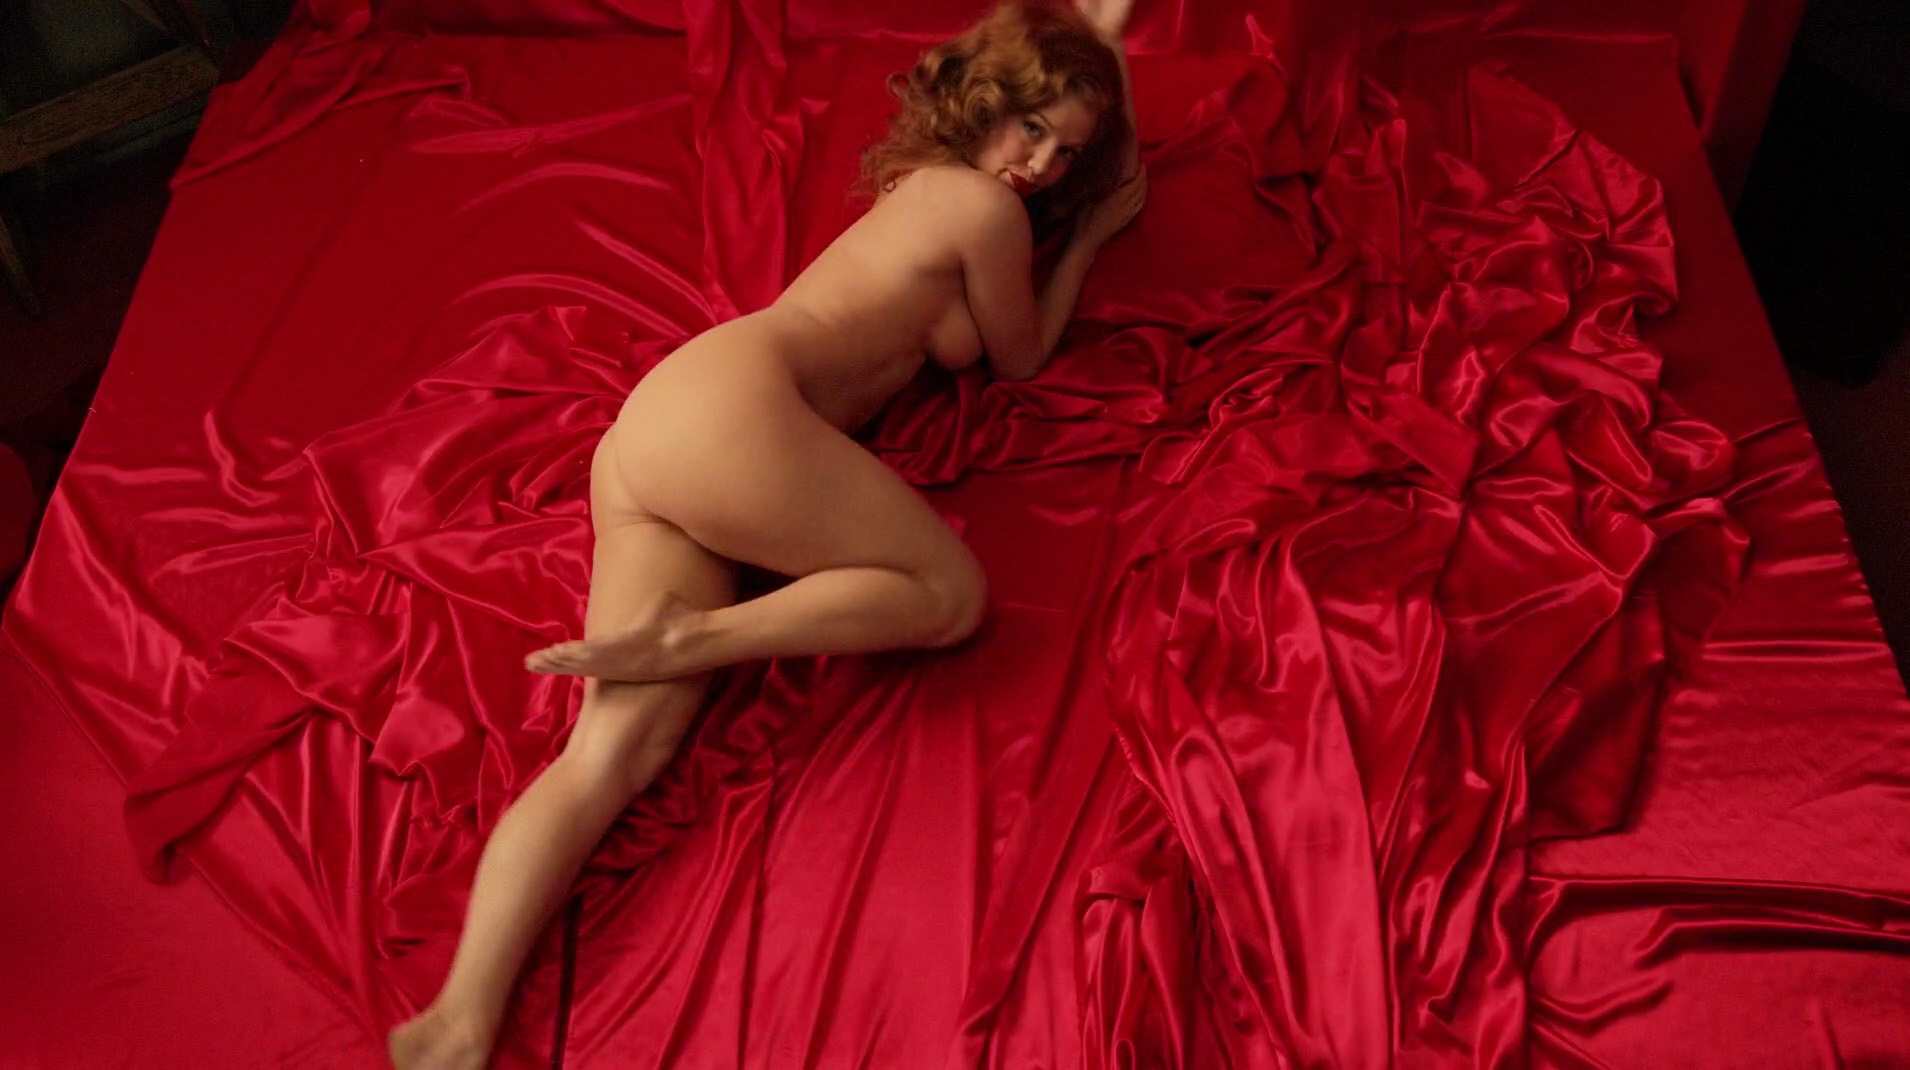 Watch Online Kelli Garner - The Secret Life Of Marilyn Free Download Nude P...